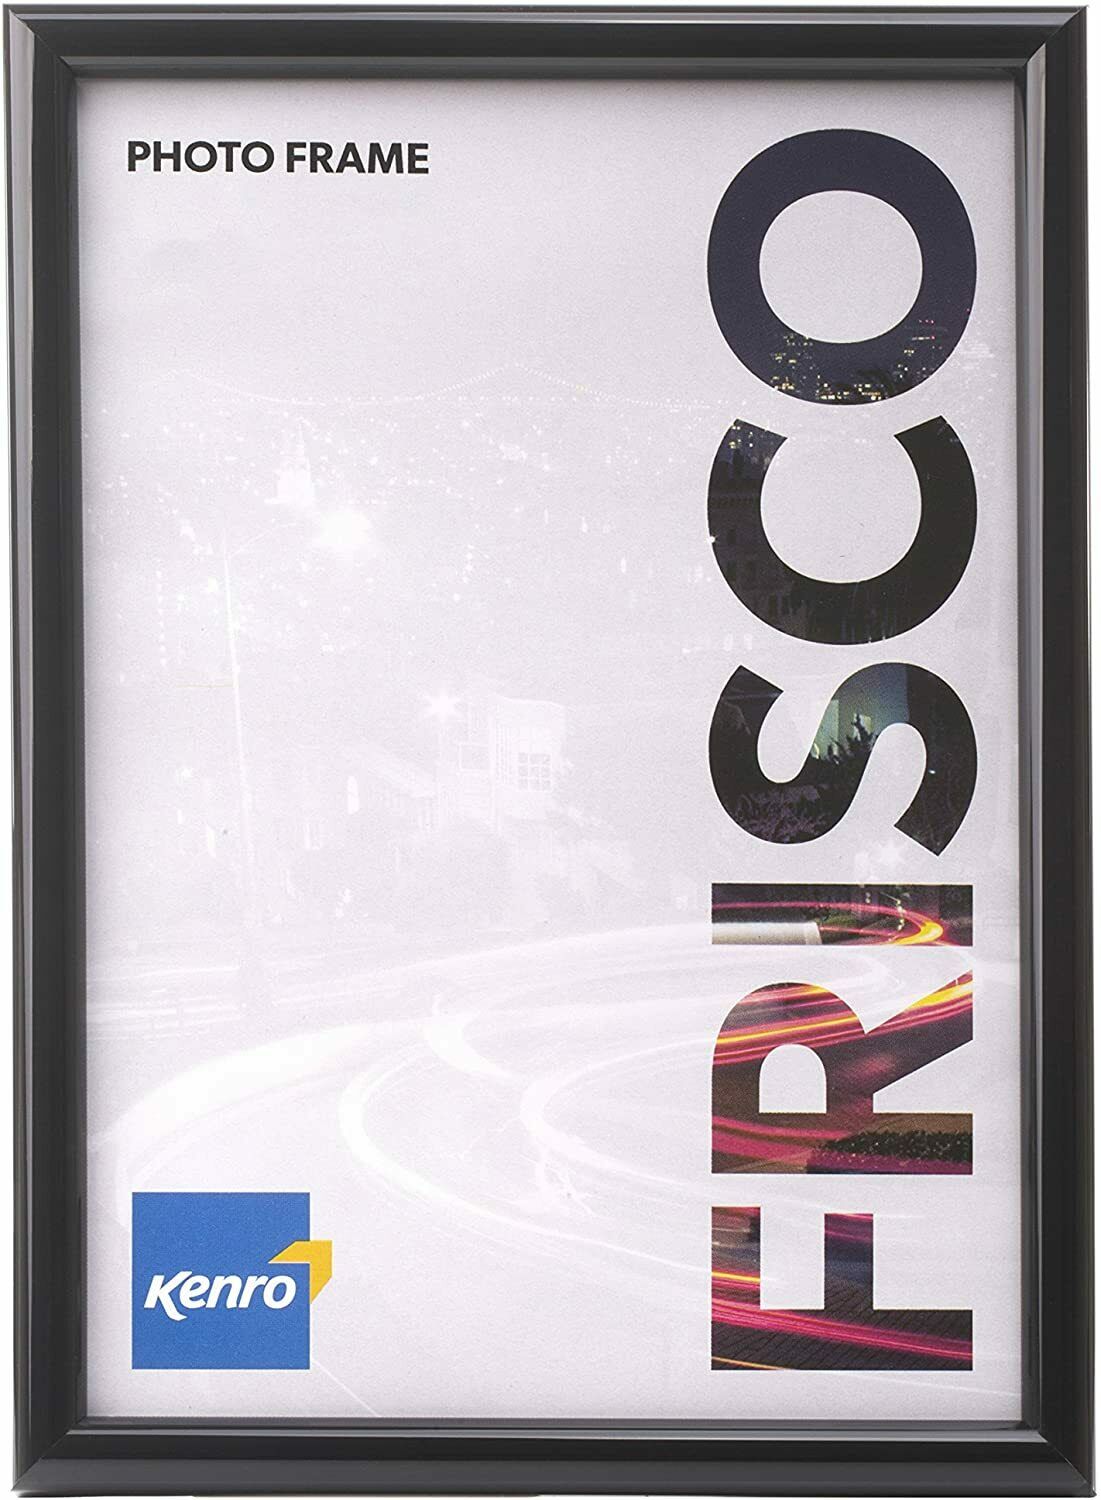 4 x Kenro Frisco A4 Black Plexiglass Photo Frame (21x30cm) Plastic Front